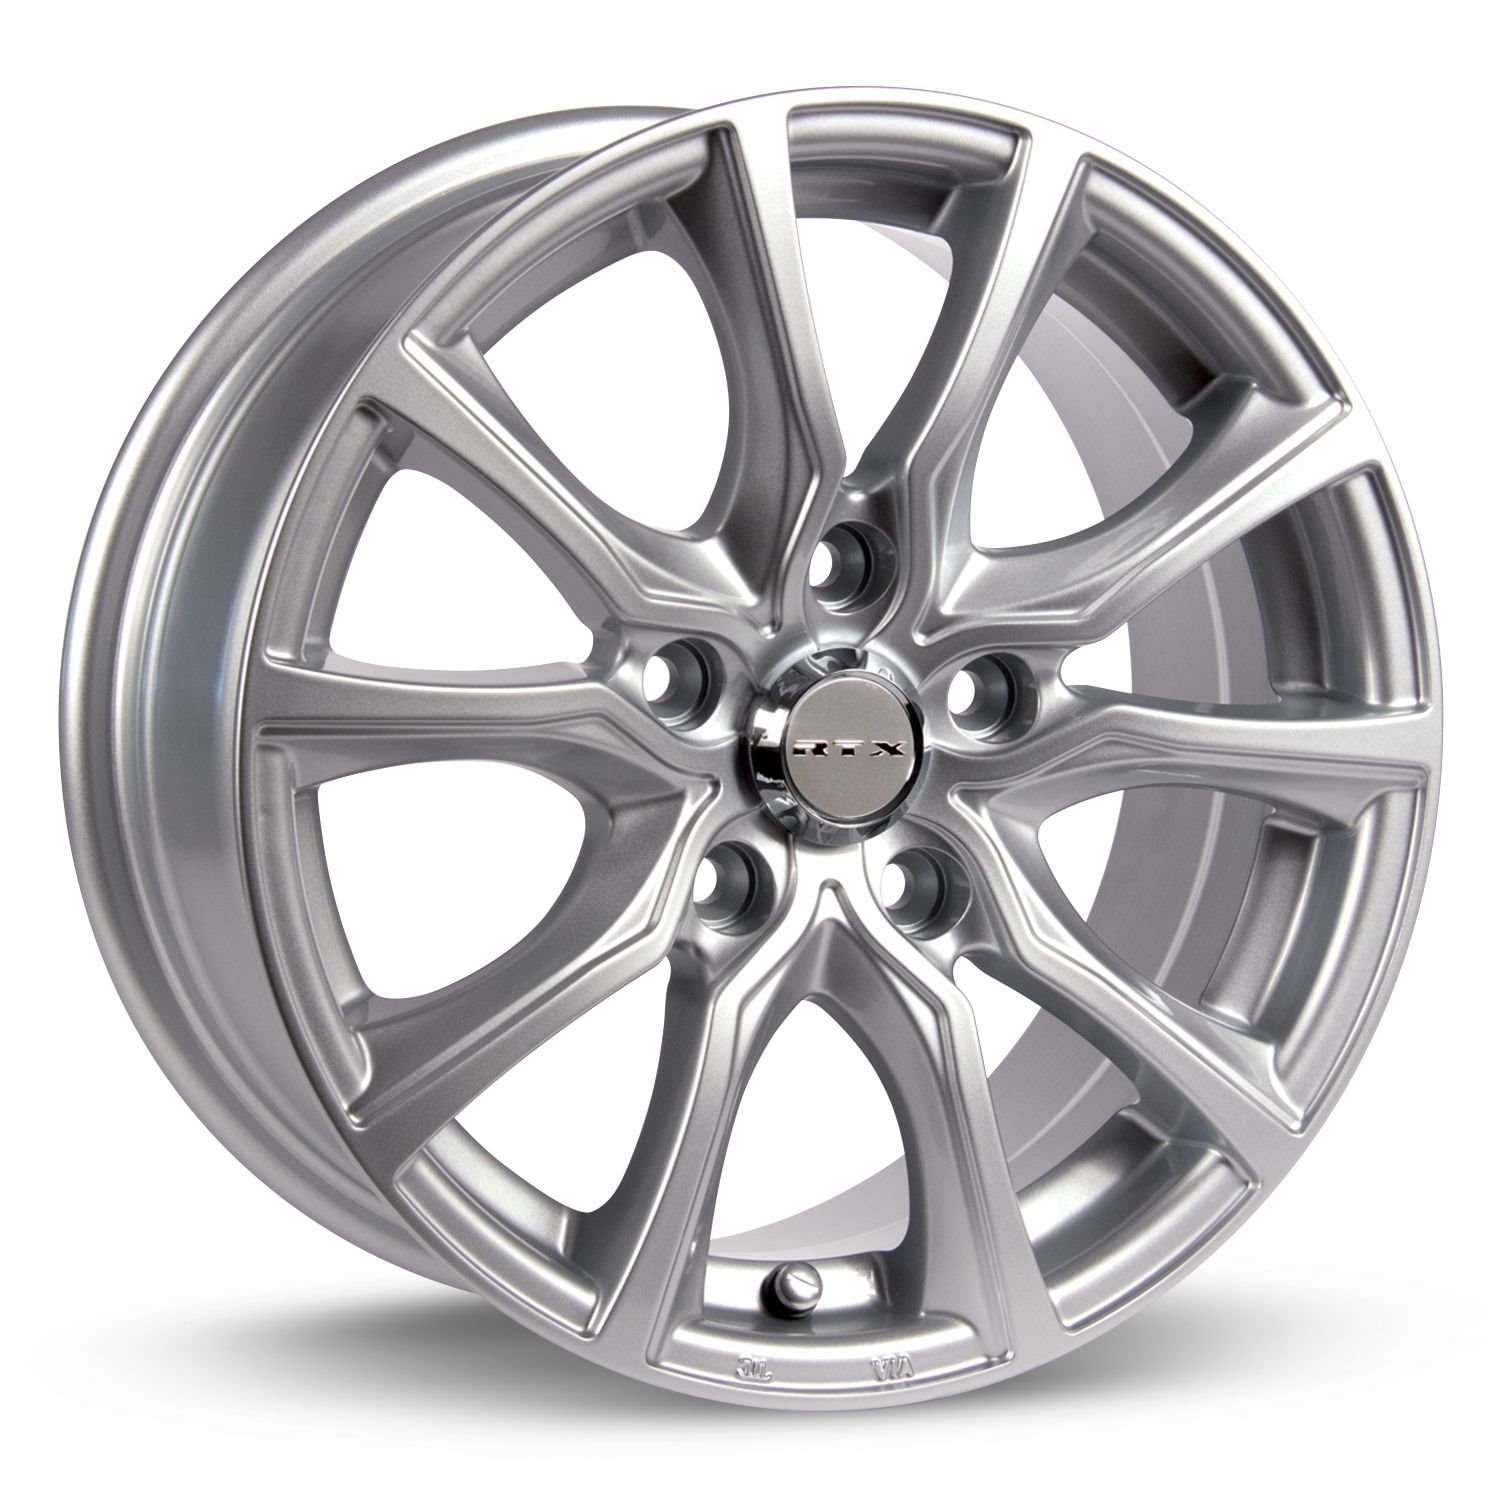 081462 RTX-Series Contour Wheel [Size: 18" x 8"] Silver Finish